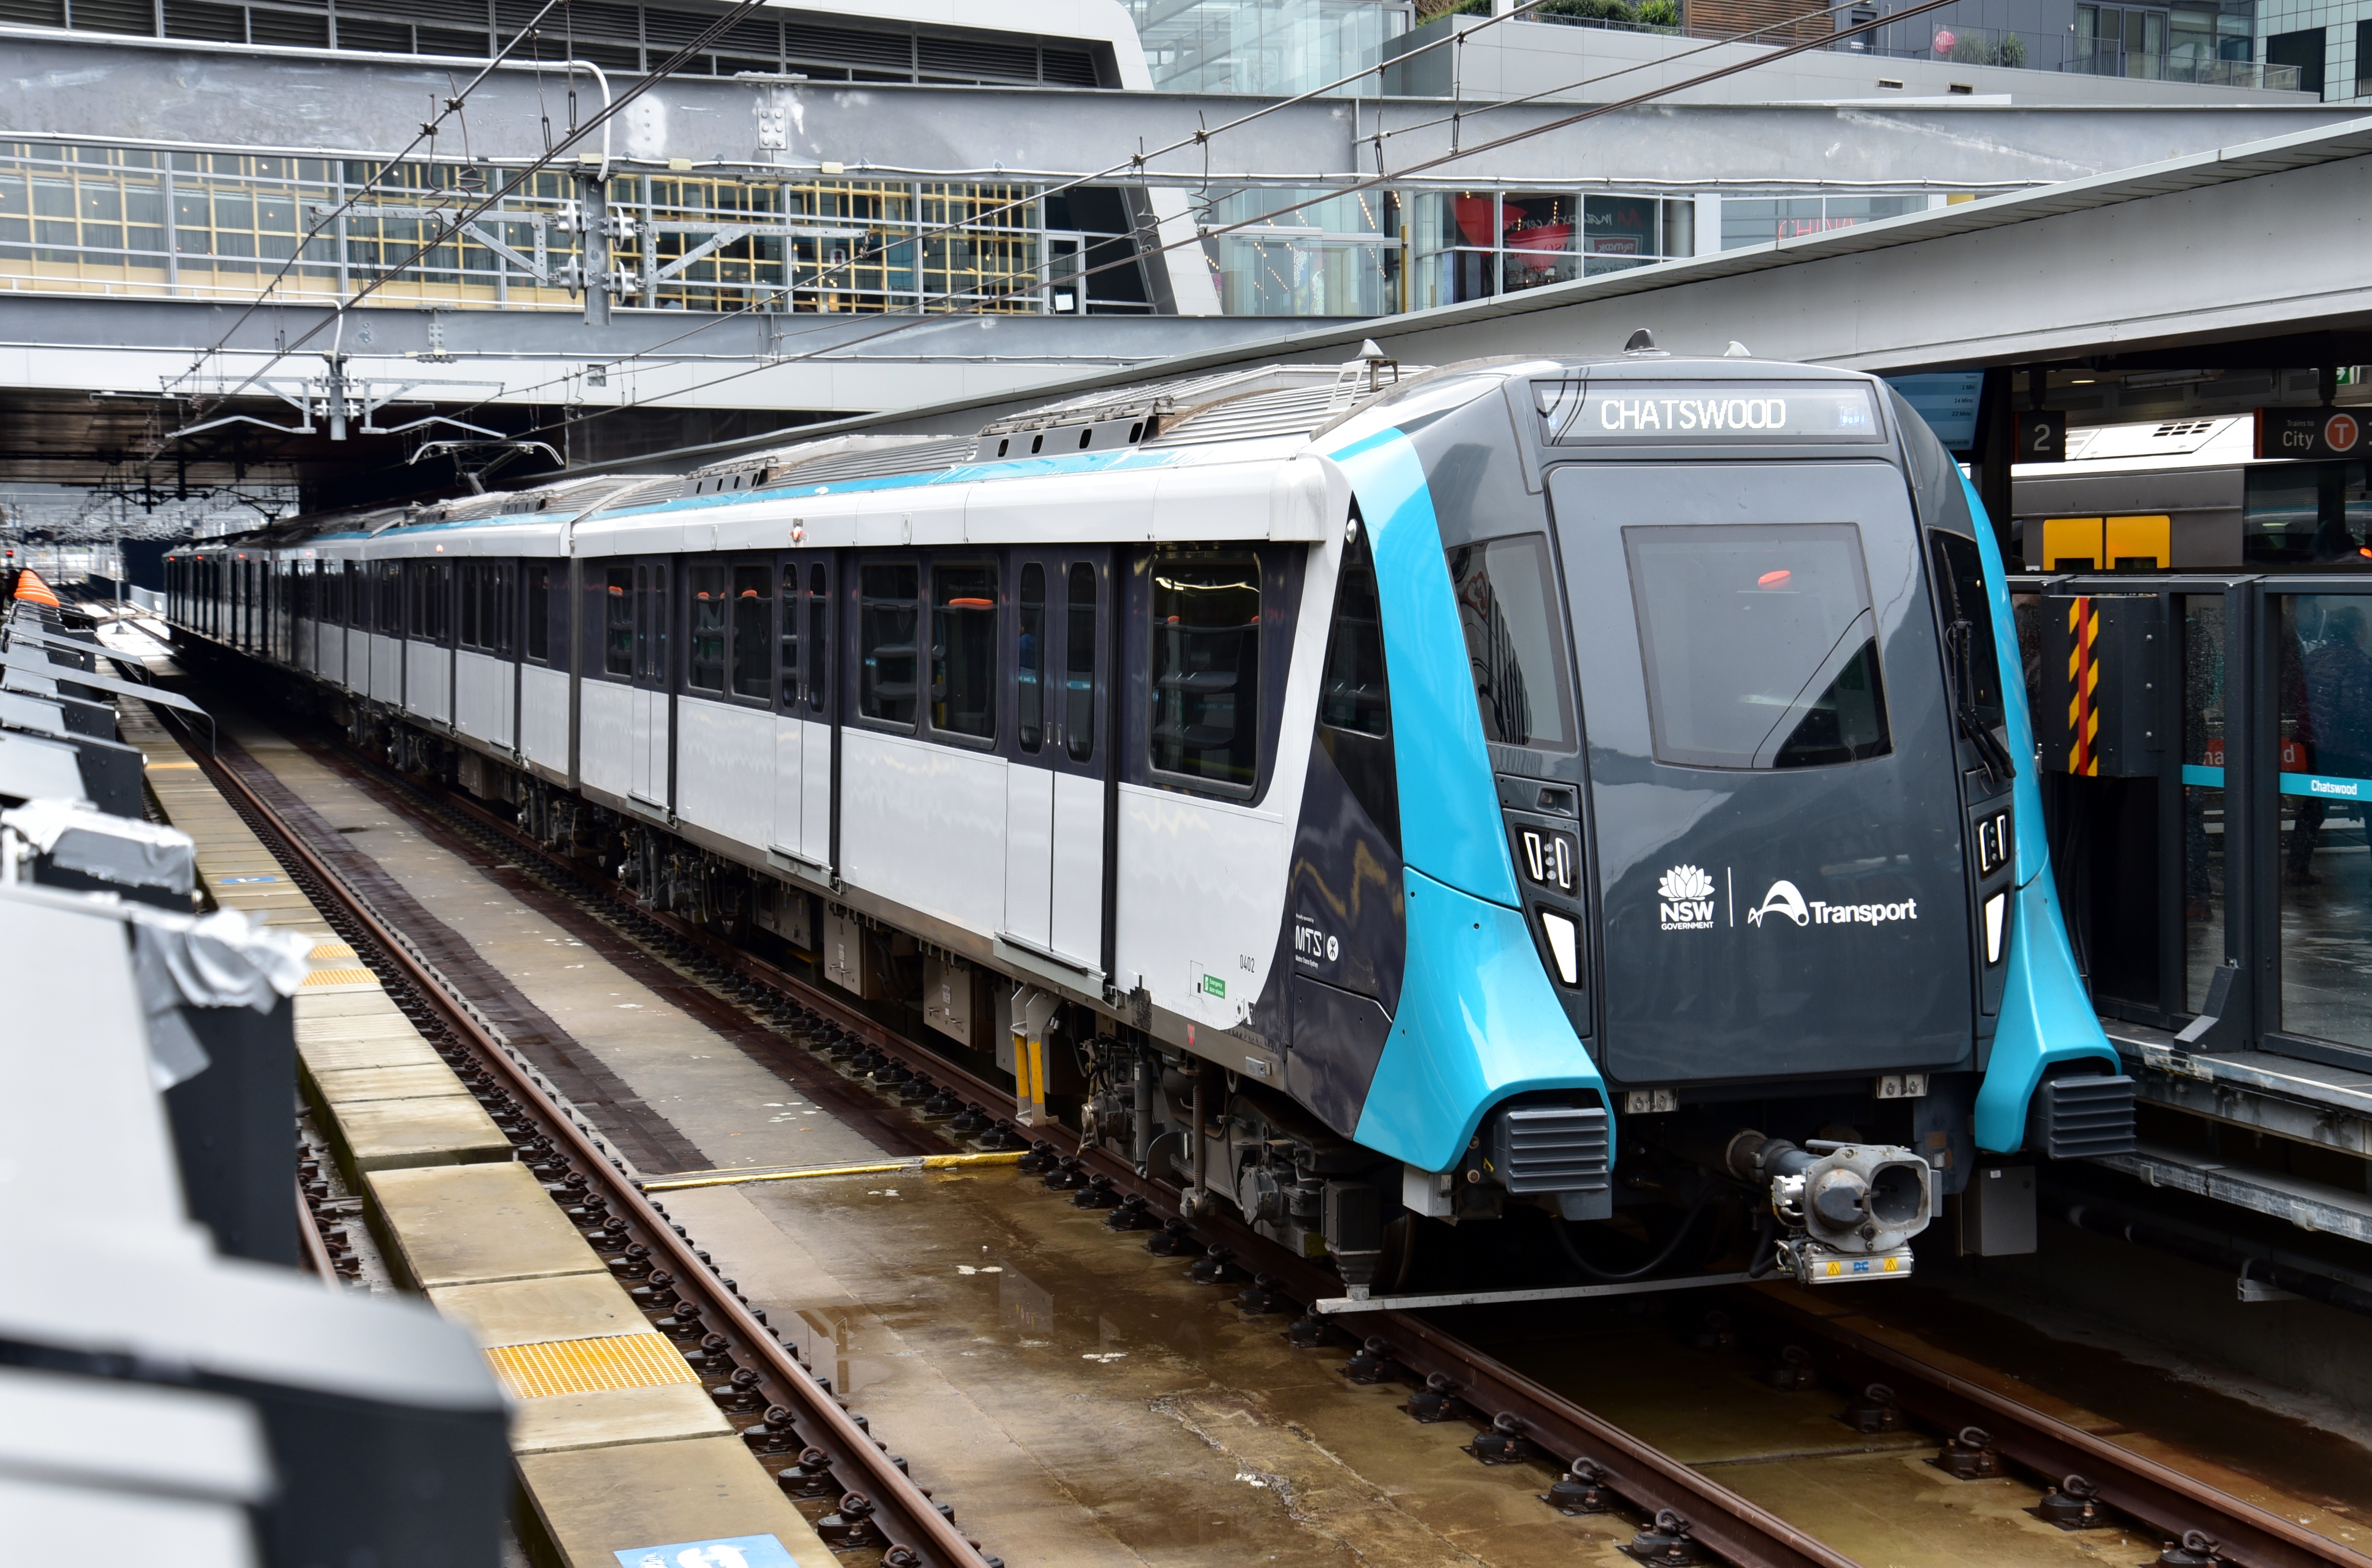 An Alstom Metropolis train at Chatswood, Sydney Metro